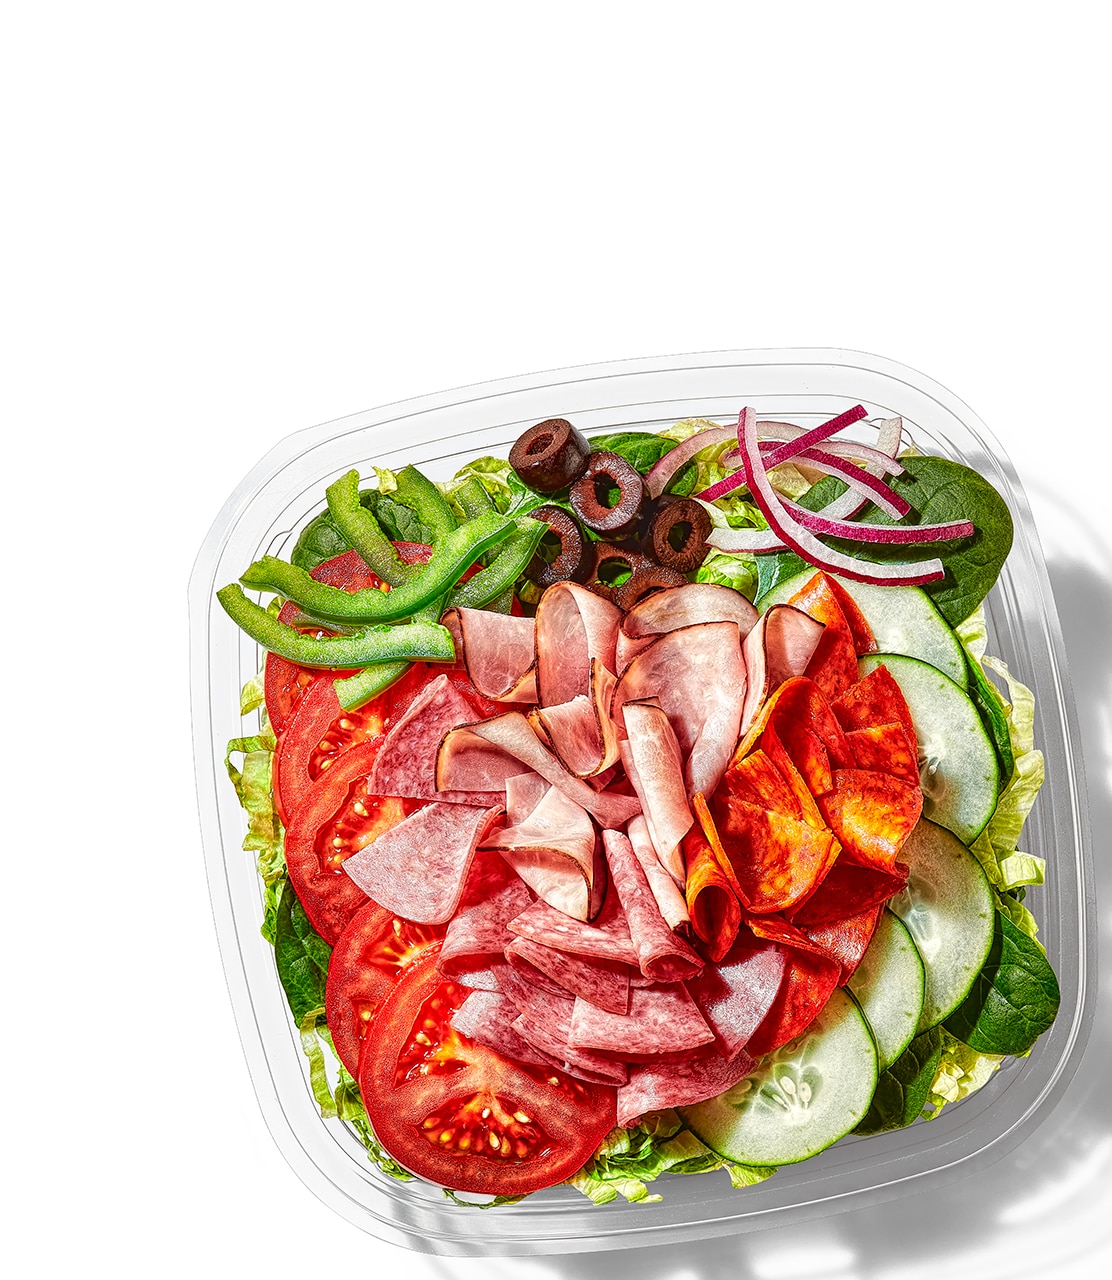 Calories in Subway Italian B.M.T. Salad